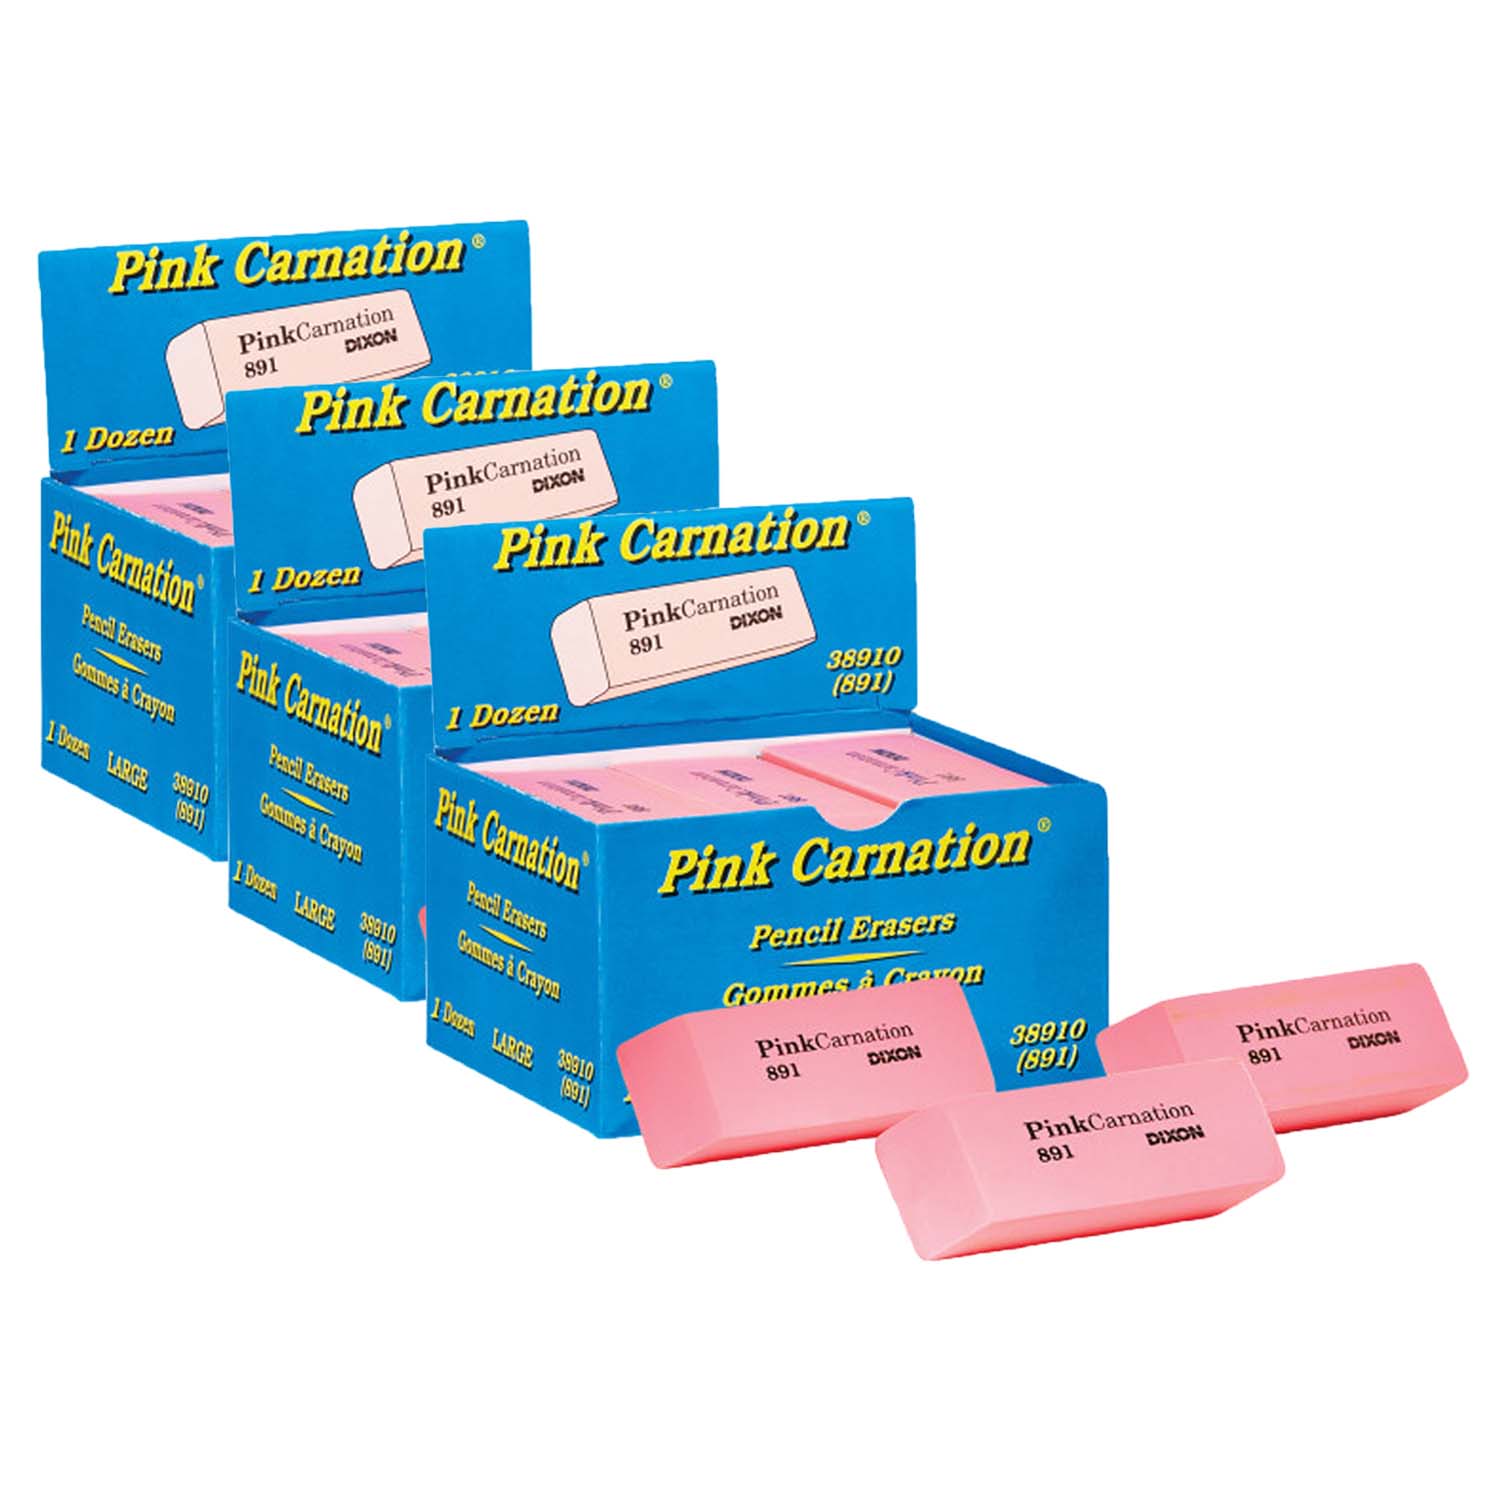 Pink Carnation Erasers, Large, 2-9/16 x 1 x 7/16, 12 Per Pack, 3 Packs